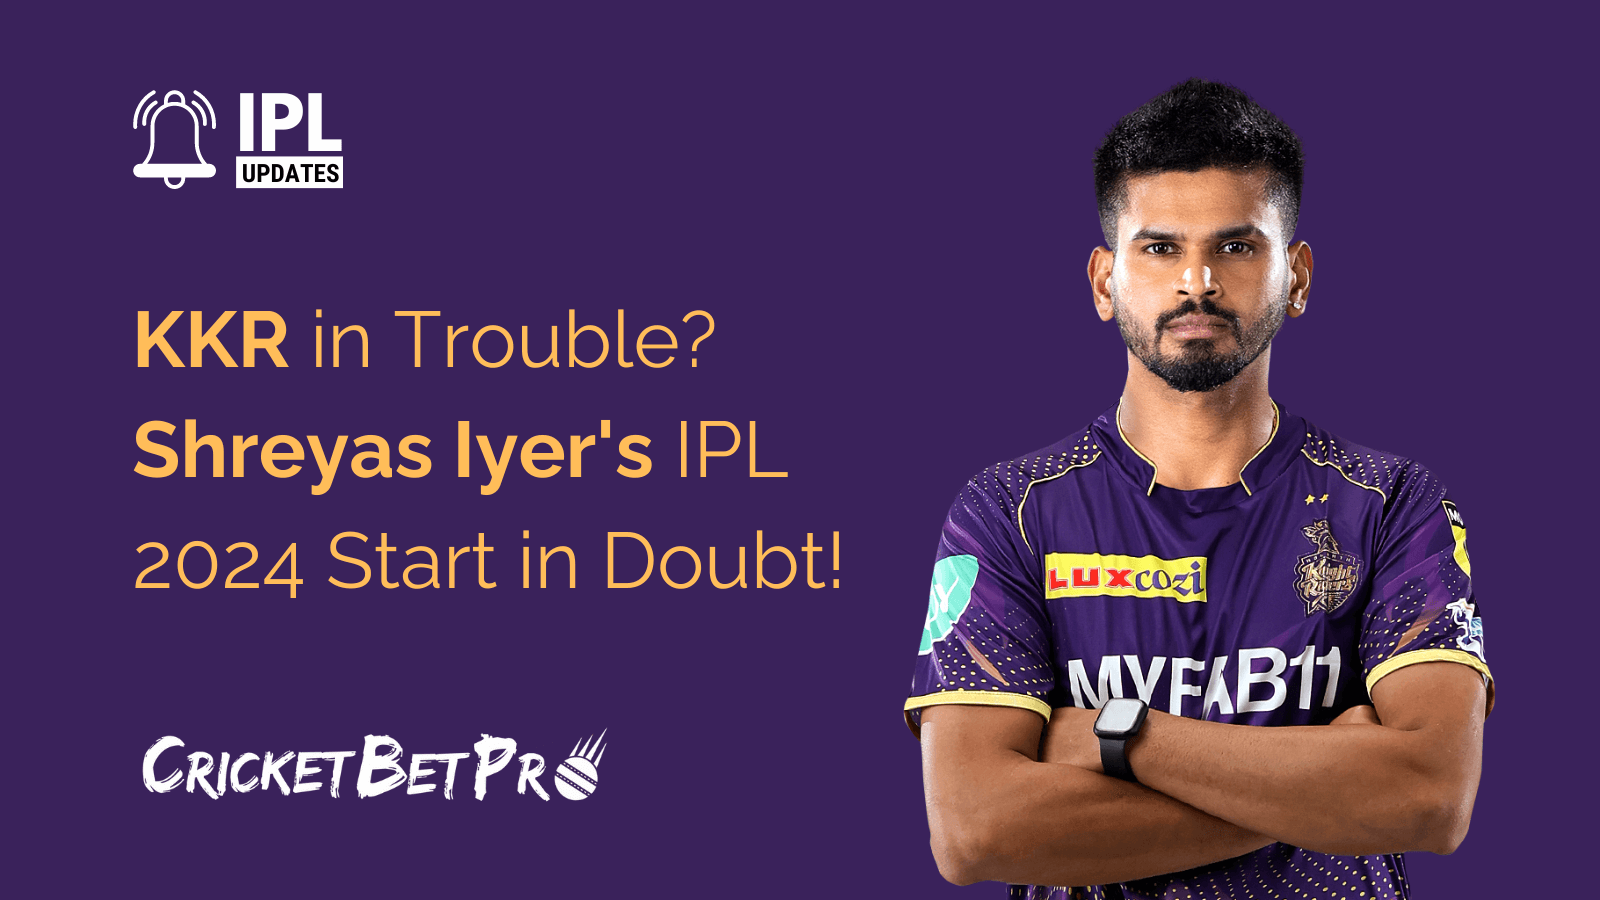 KKR in Trouble? Shreyas Iyer's IPL 2024 Start in Doubt!